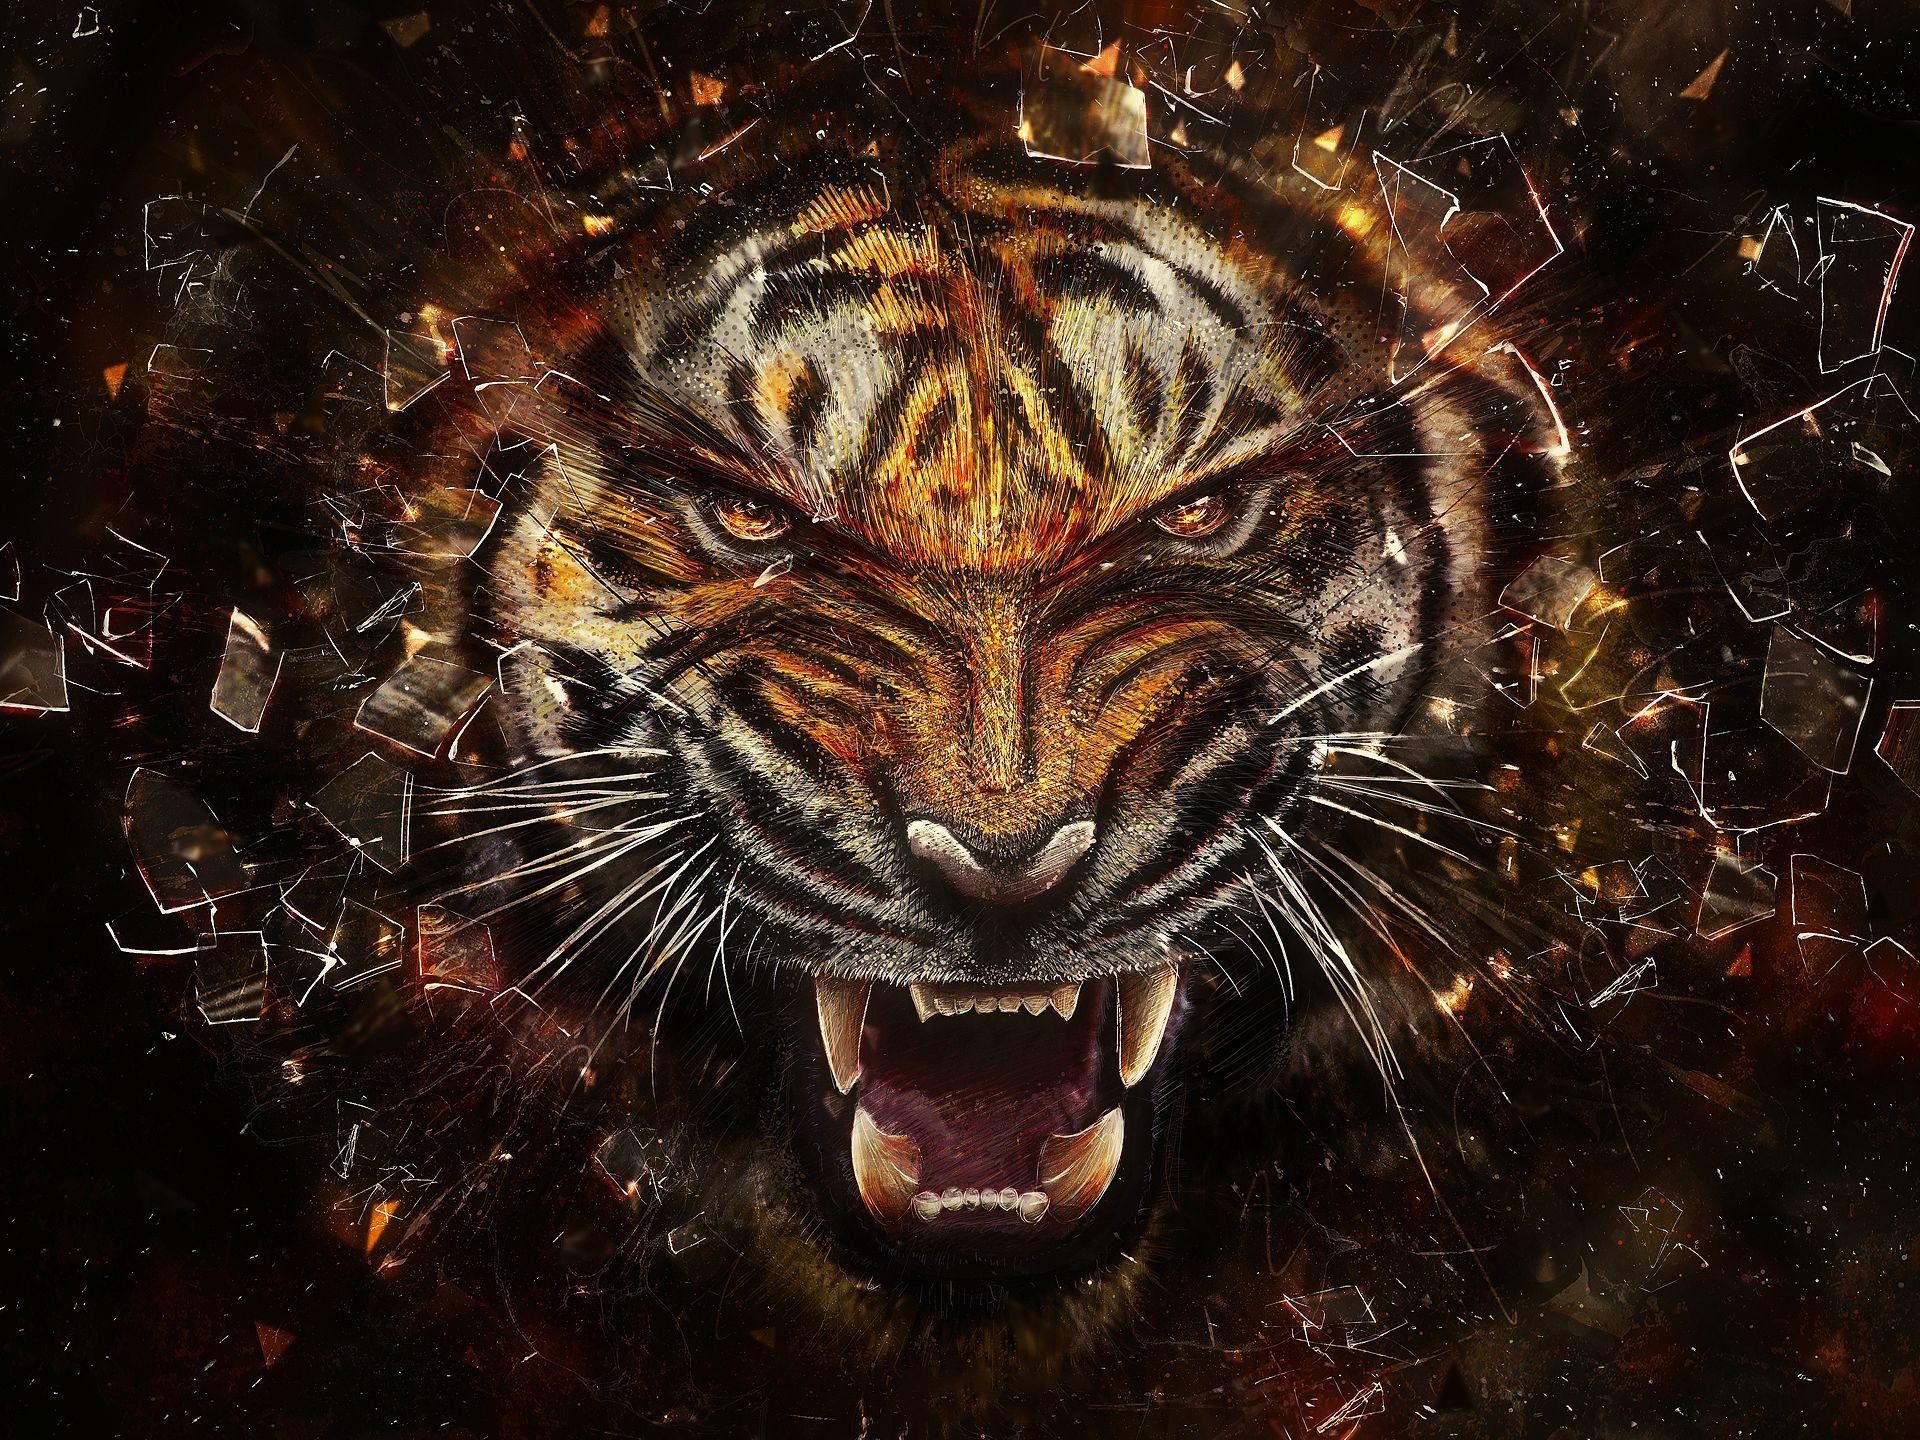 Tiger wallpapers hd